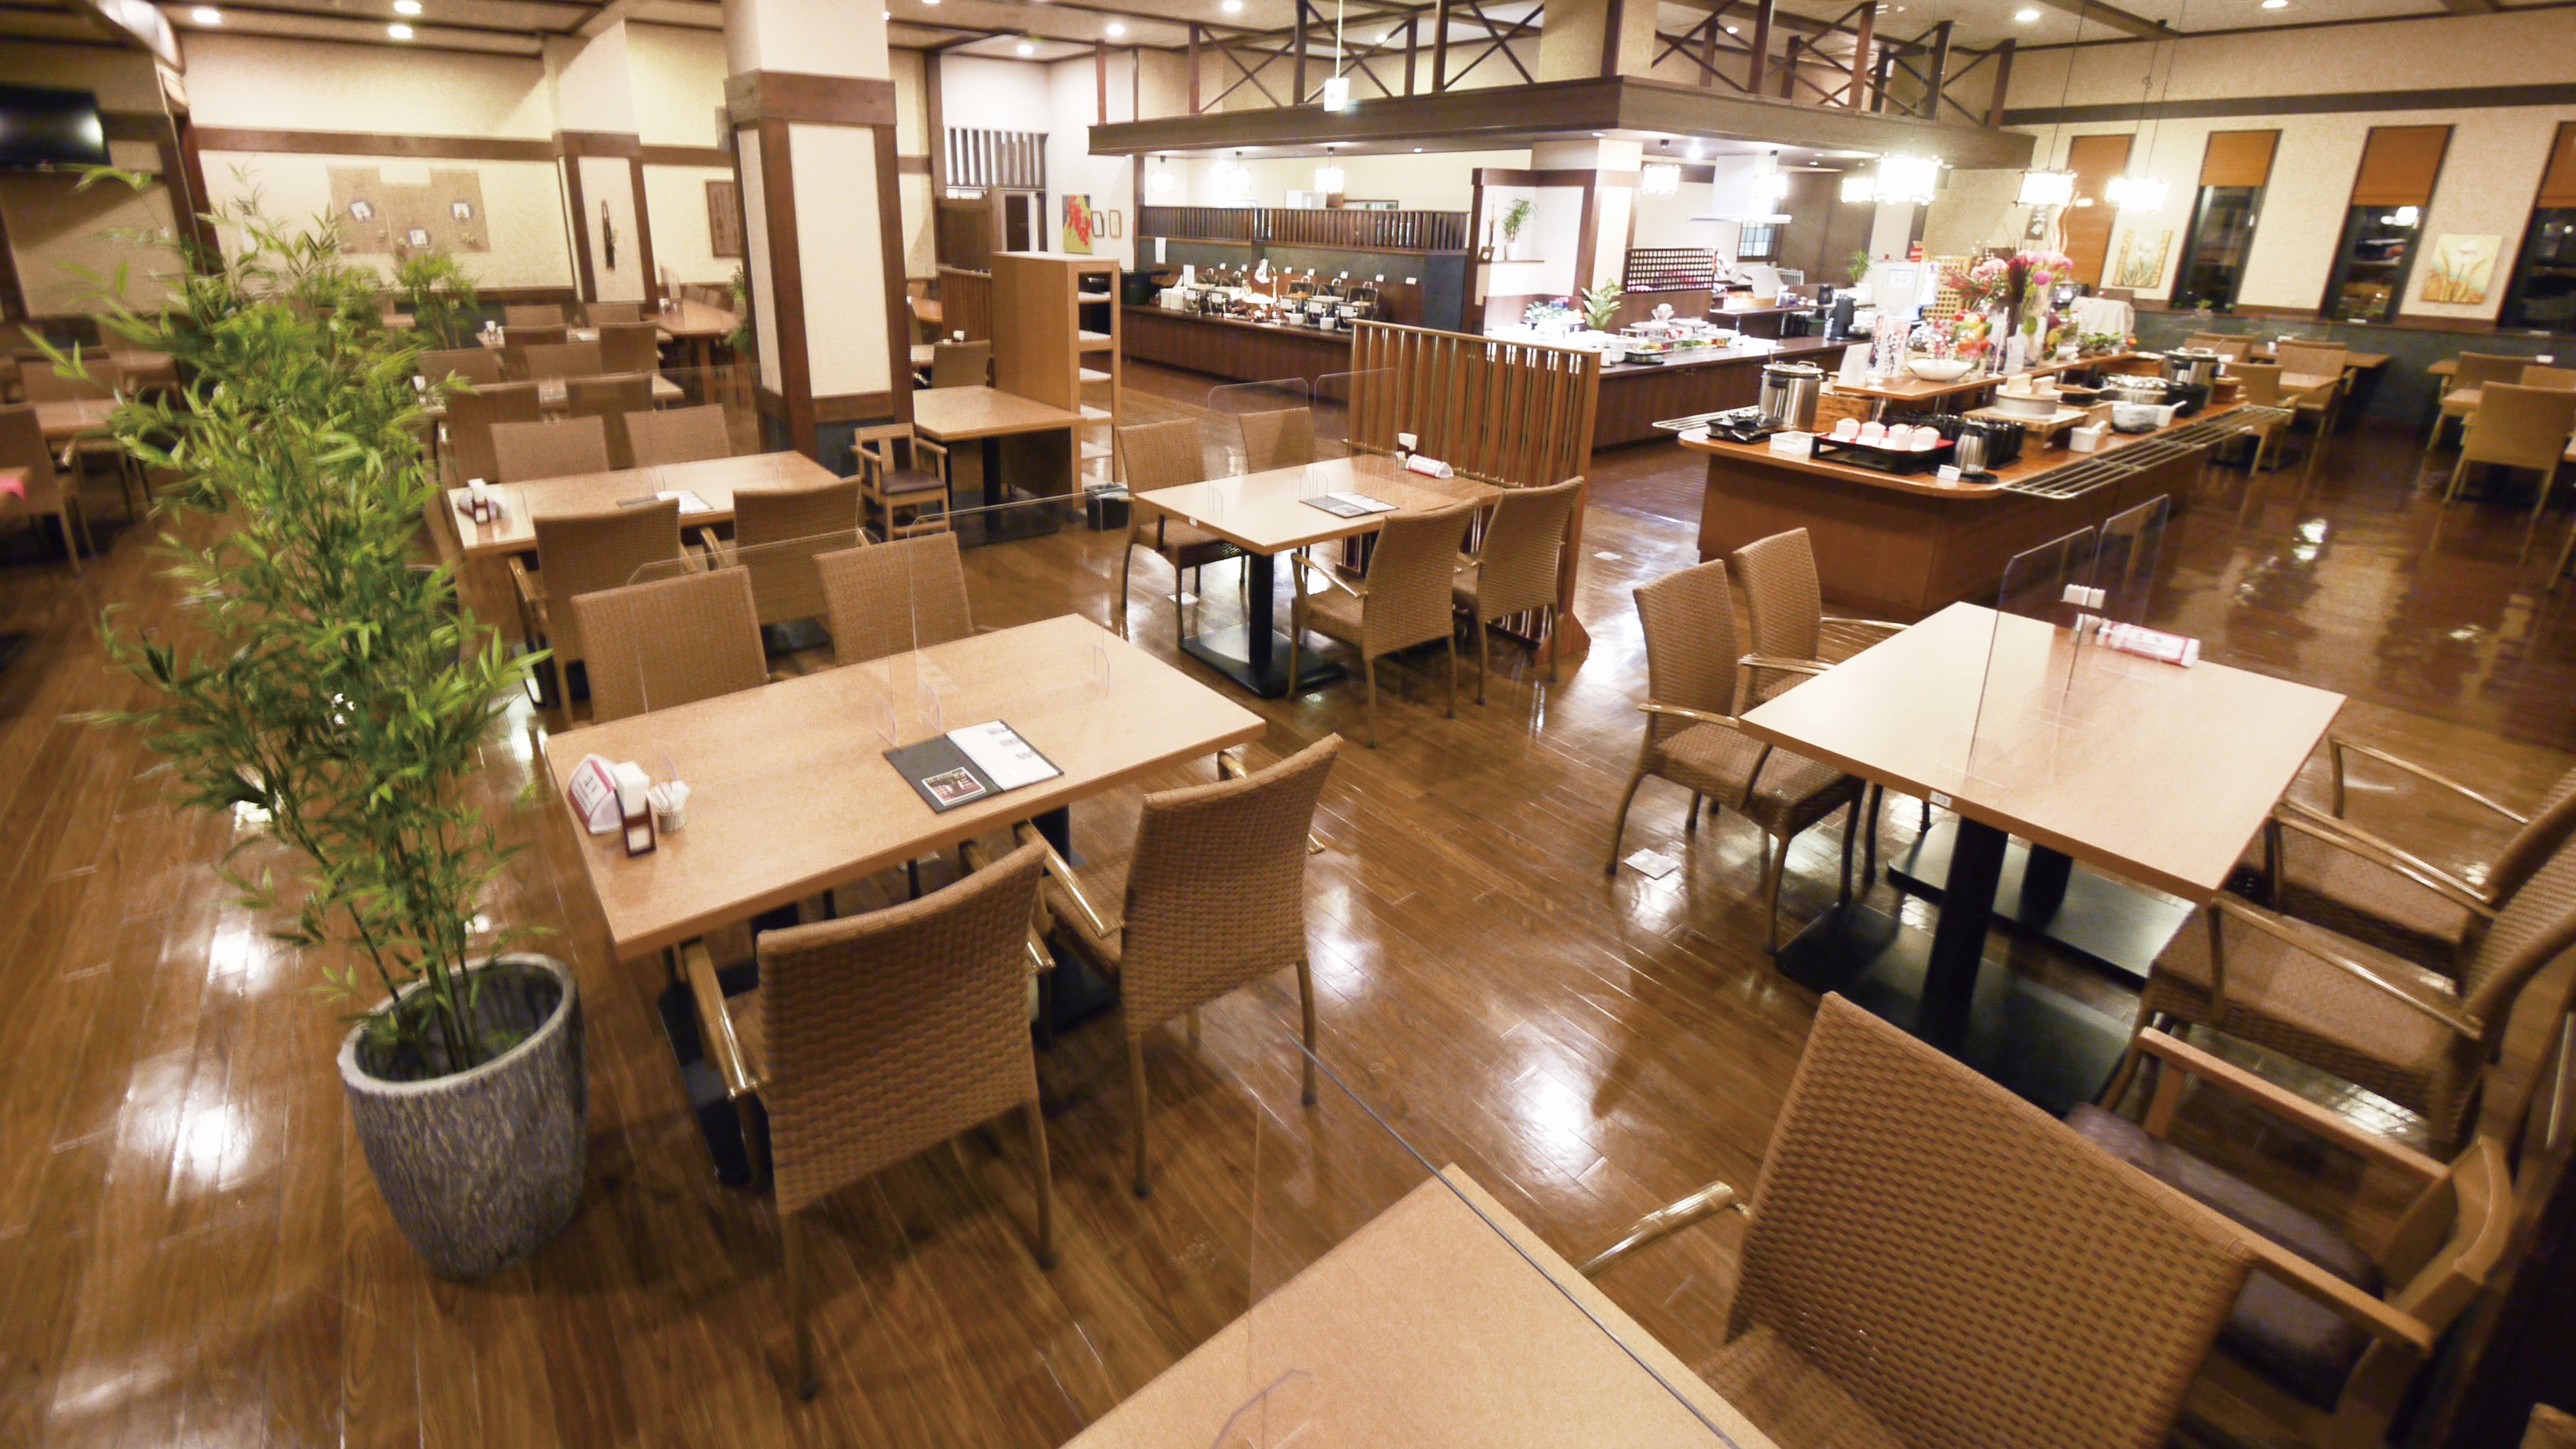 ■ Restaurant Hall